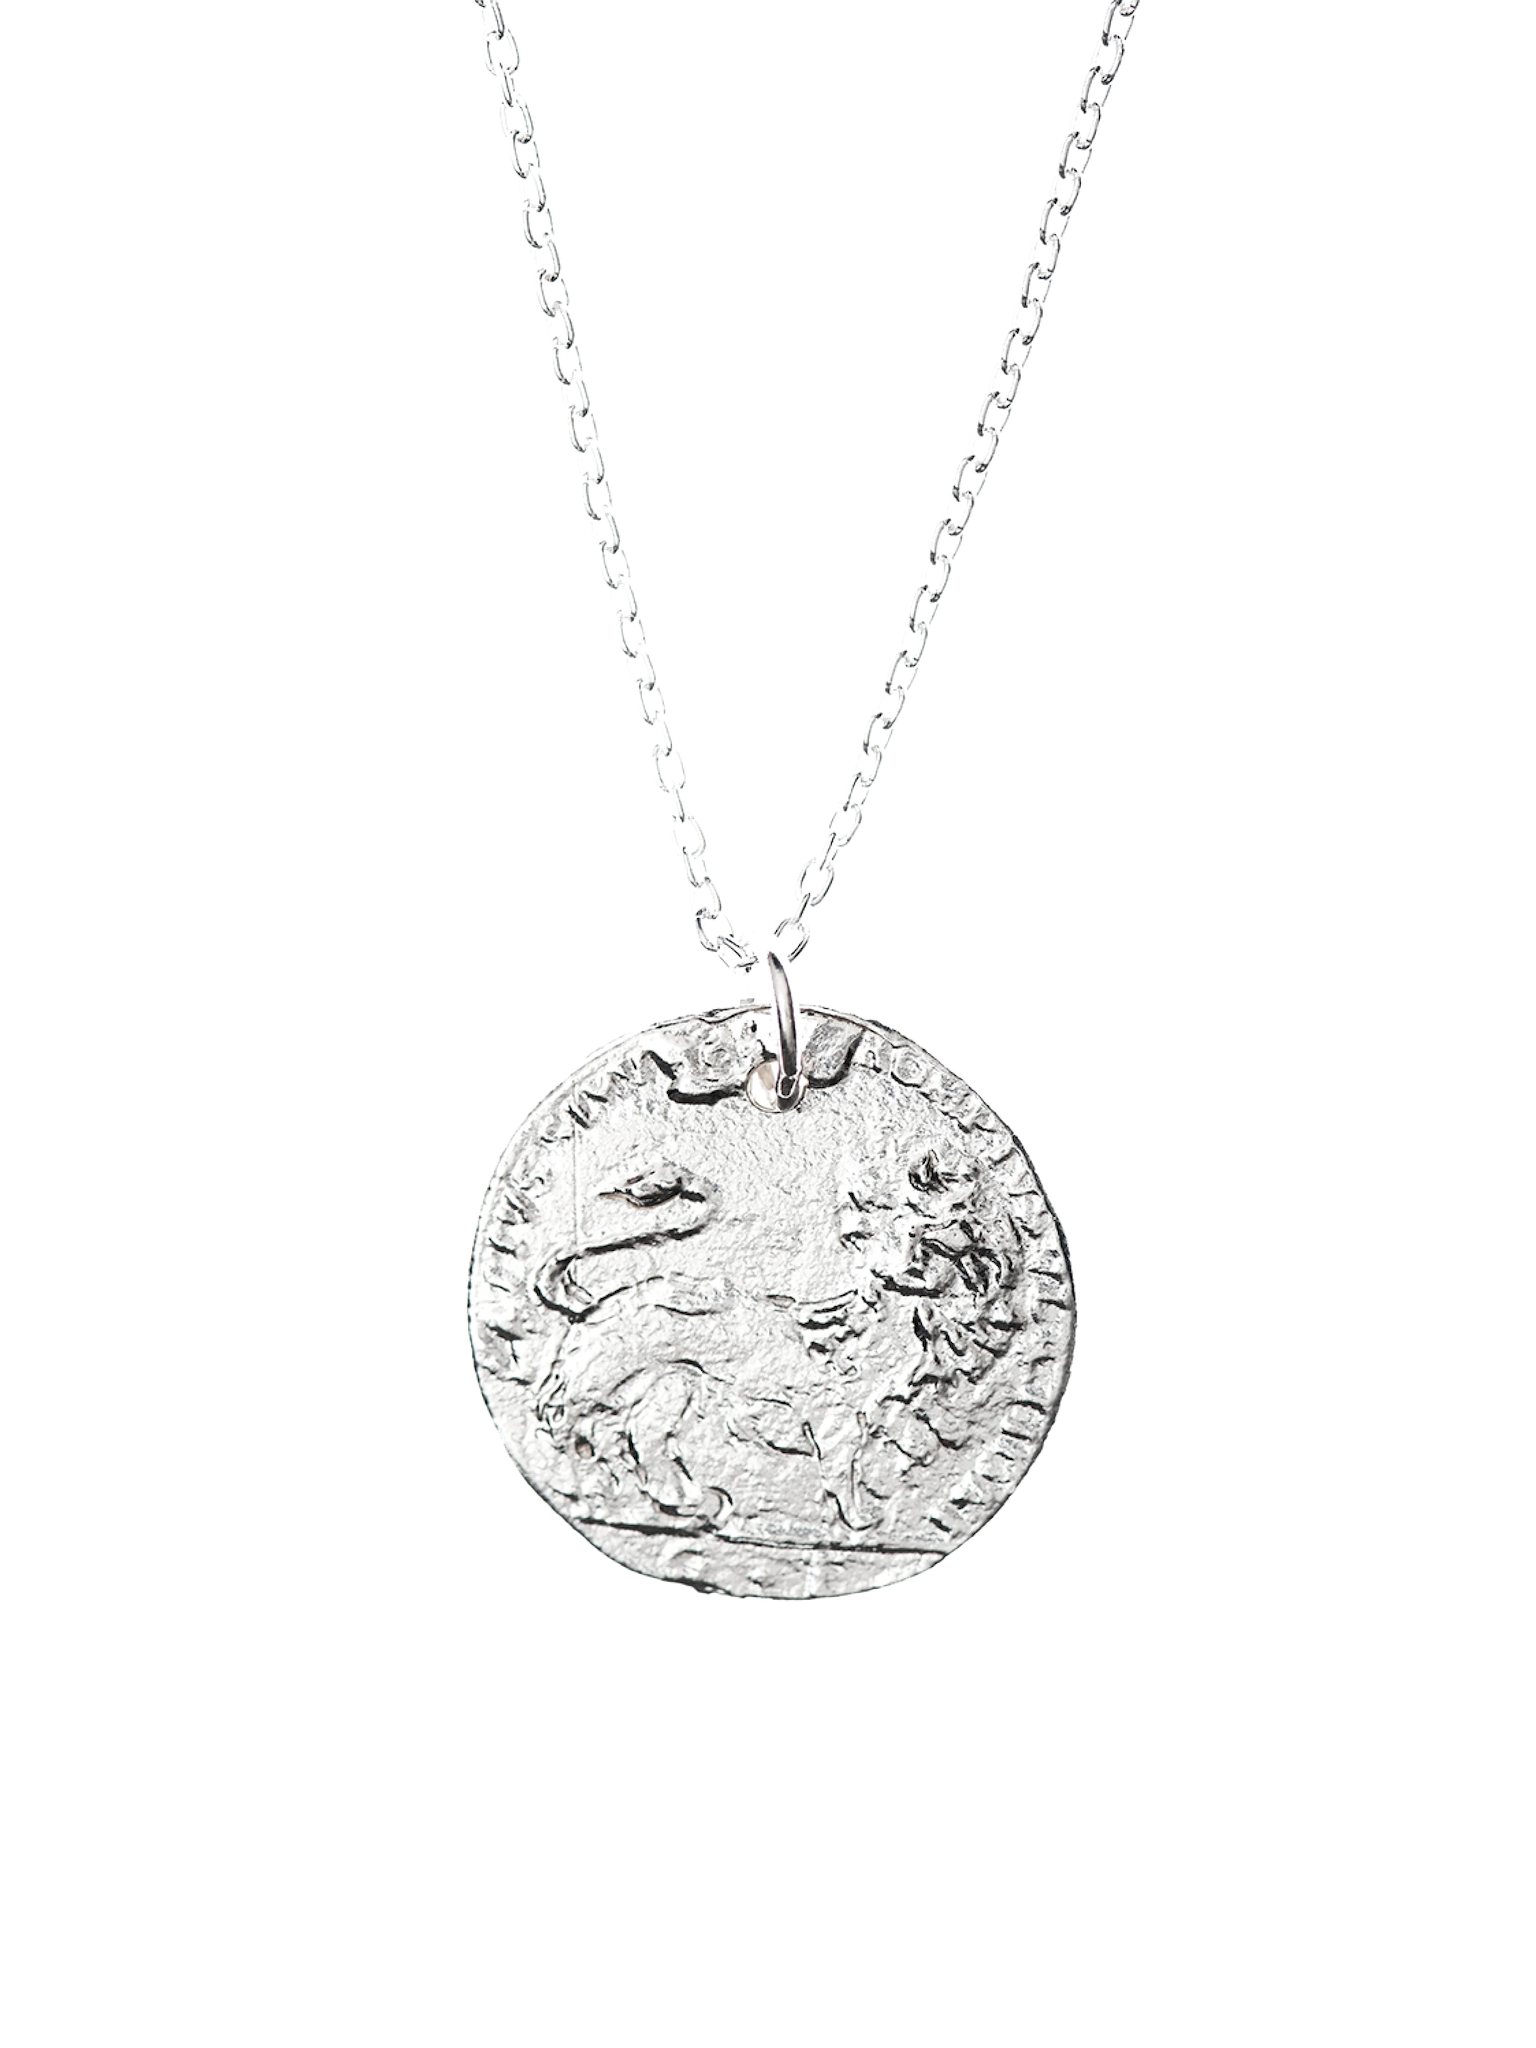 The medium snow lion medallion